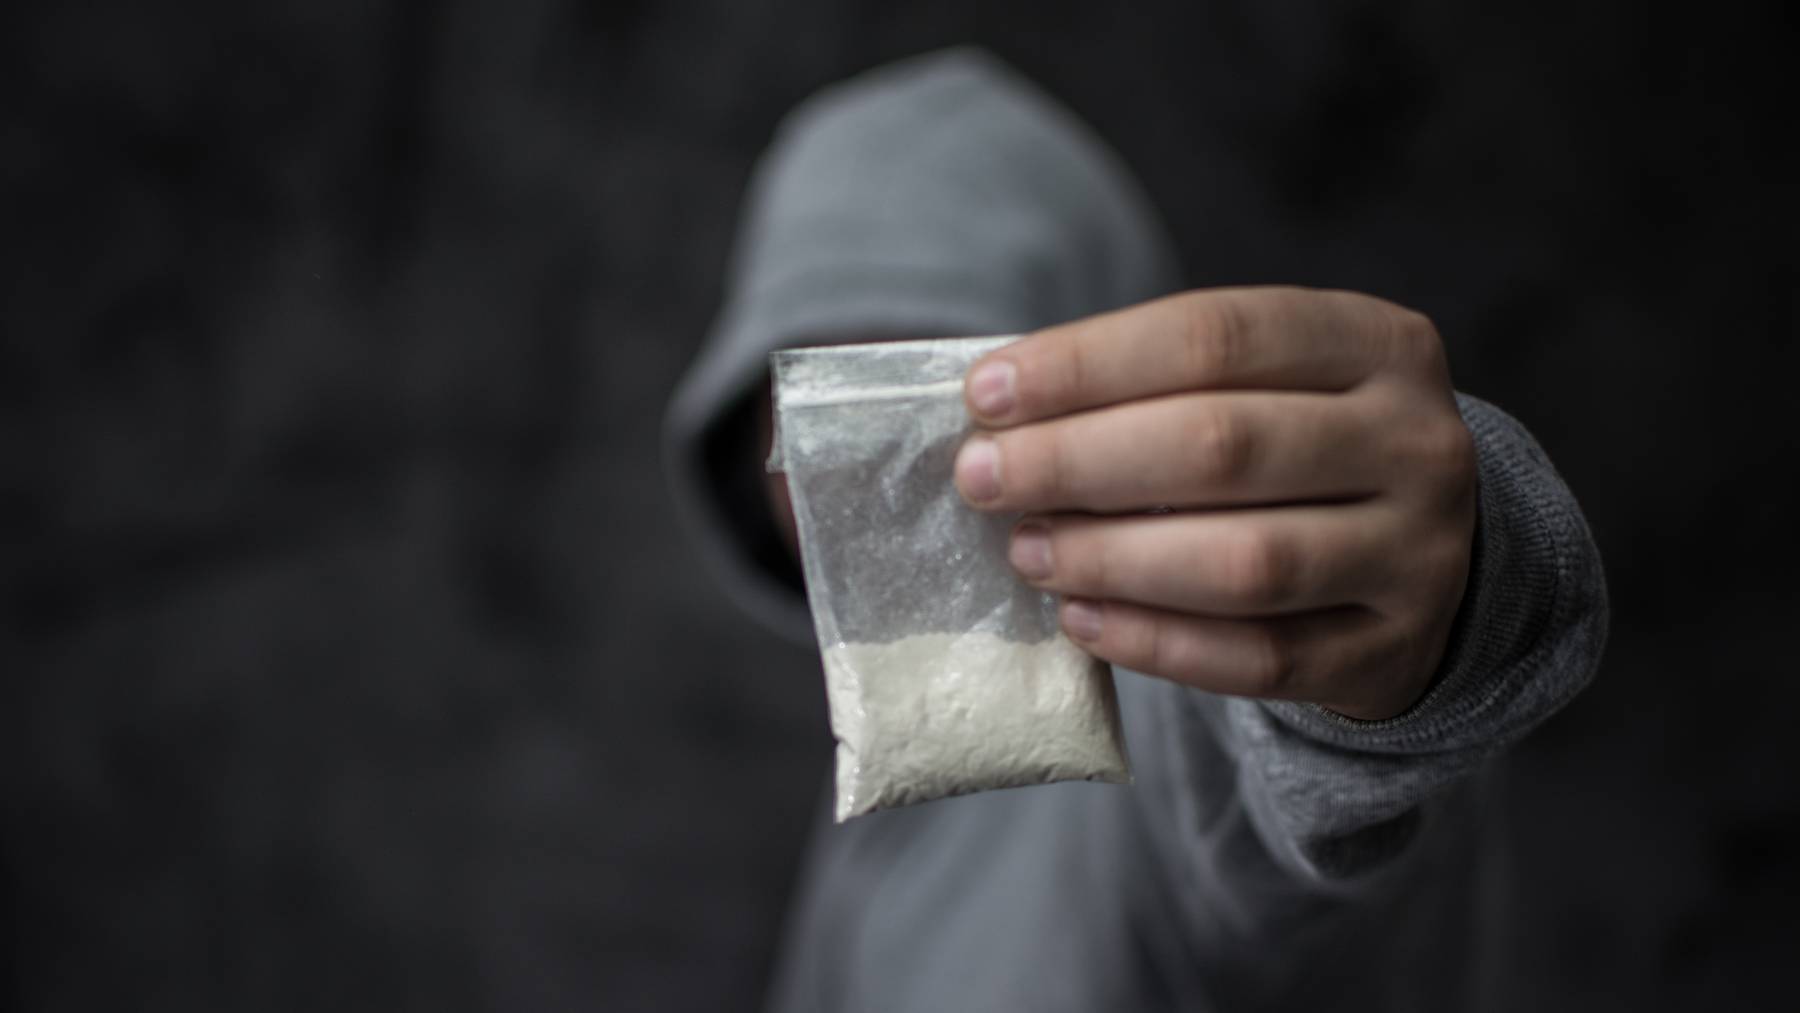 Mann mit Kokainpulver in Plastiktüte // Koks Drogen Dealer Symbolbild